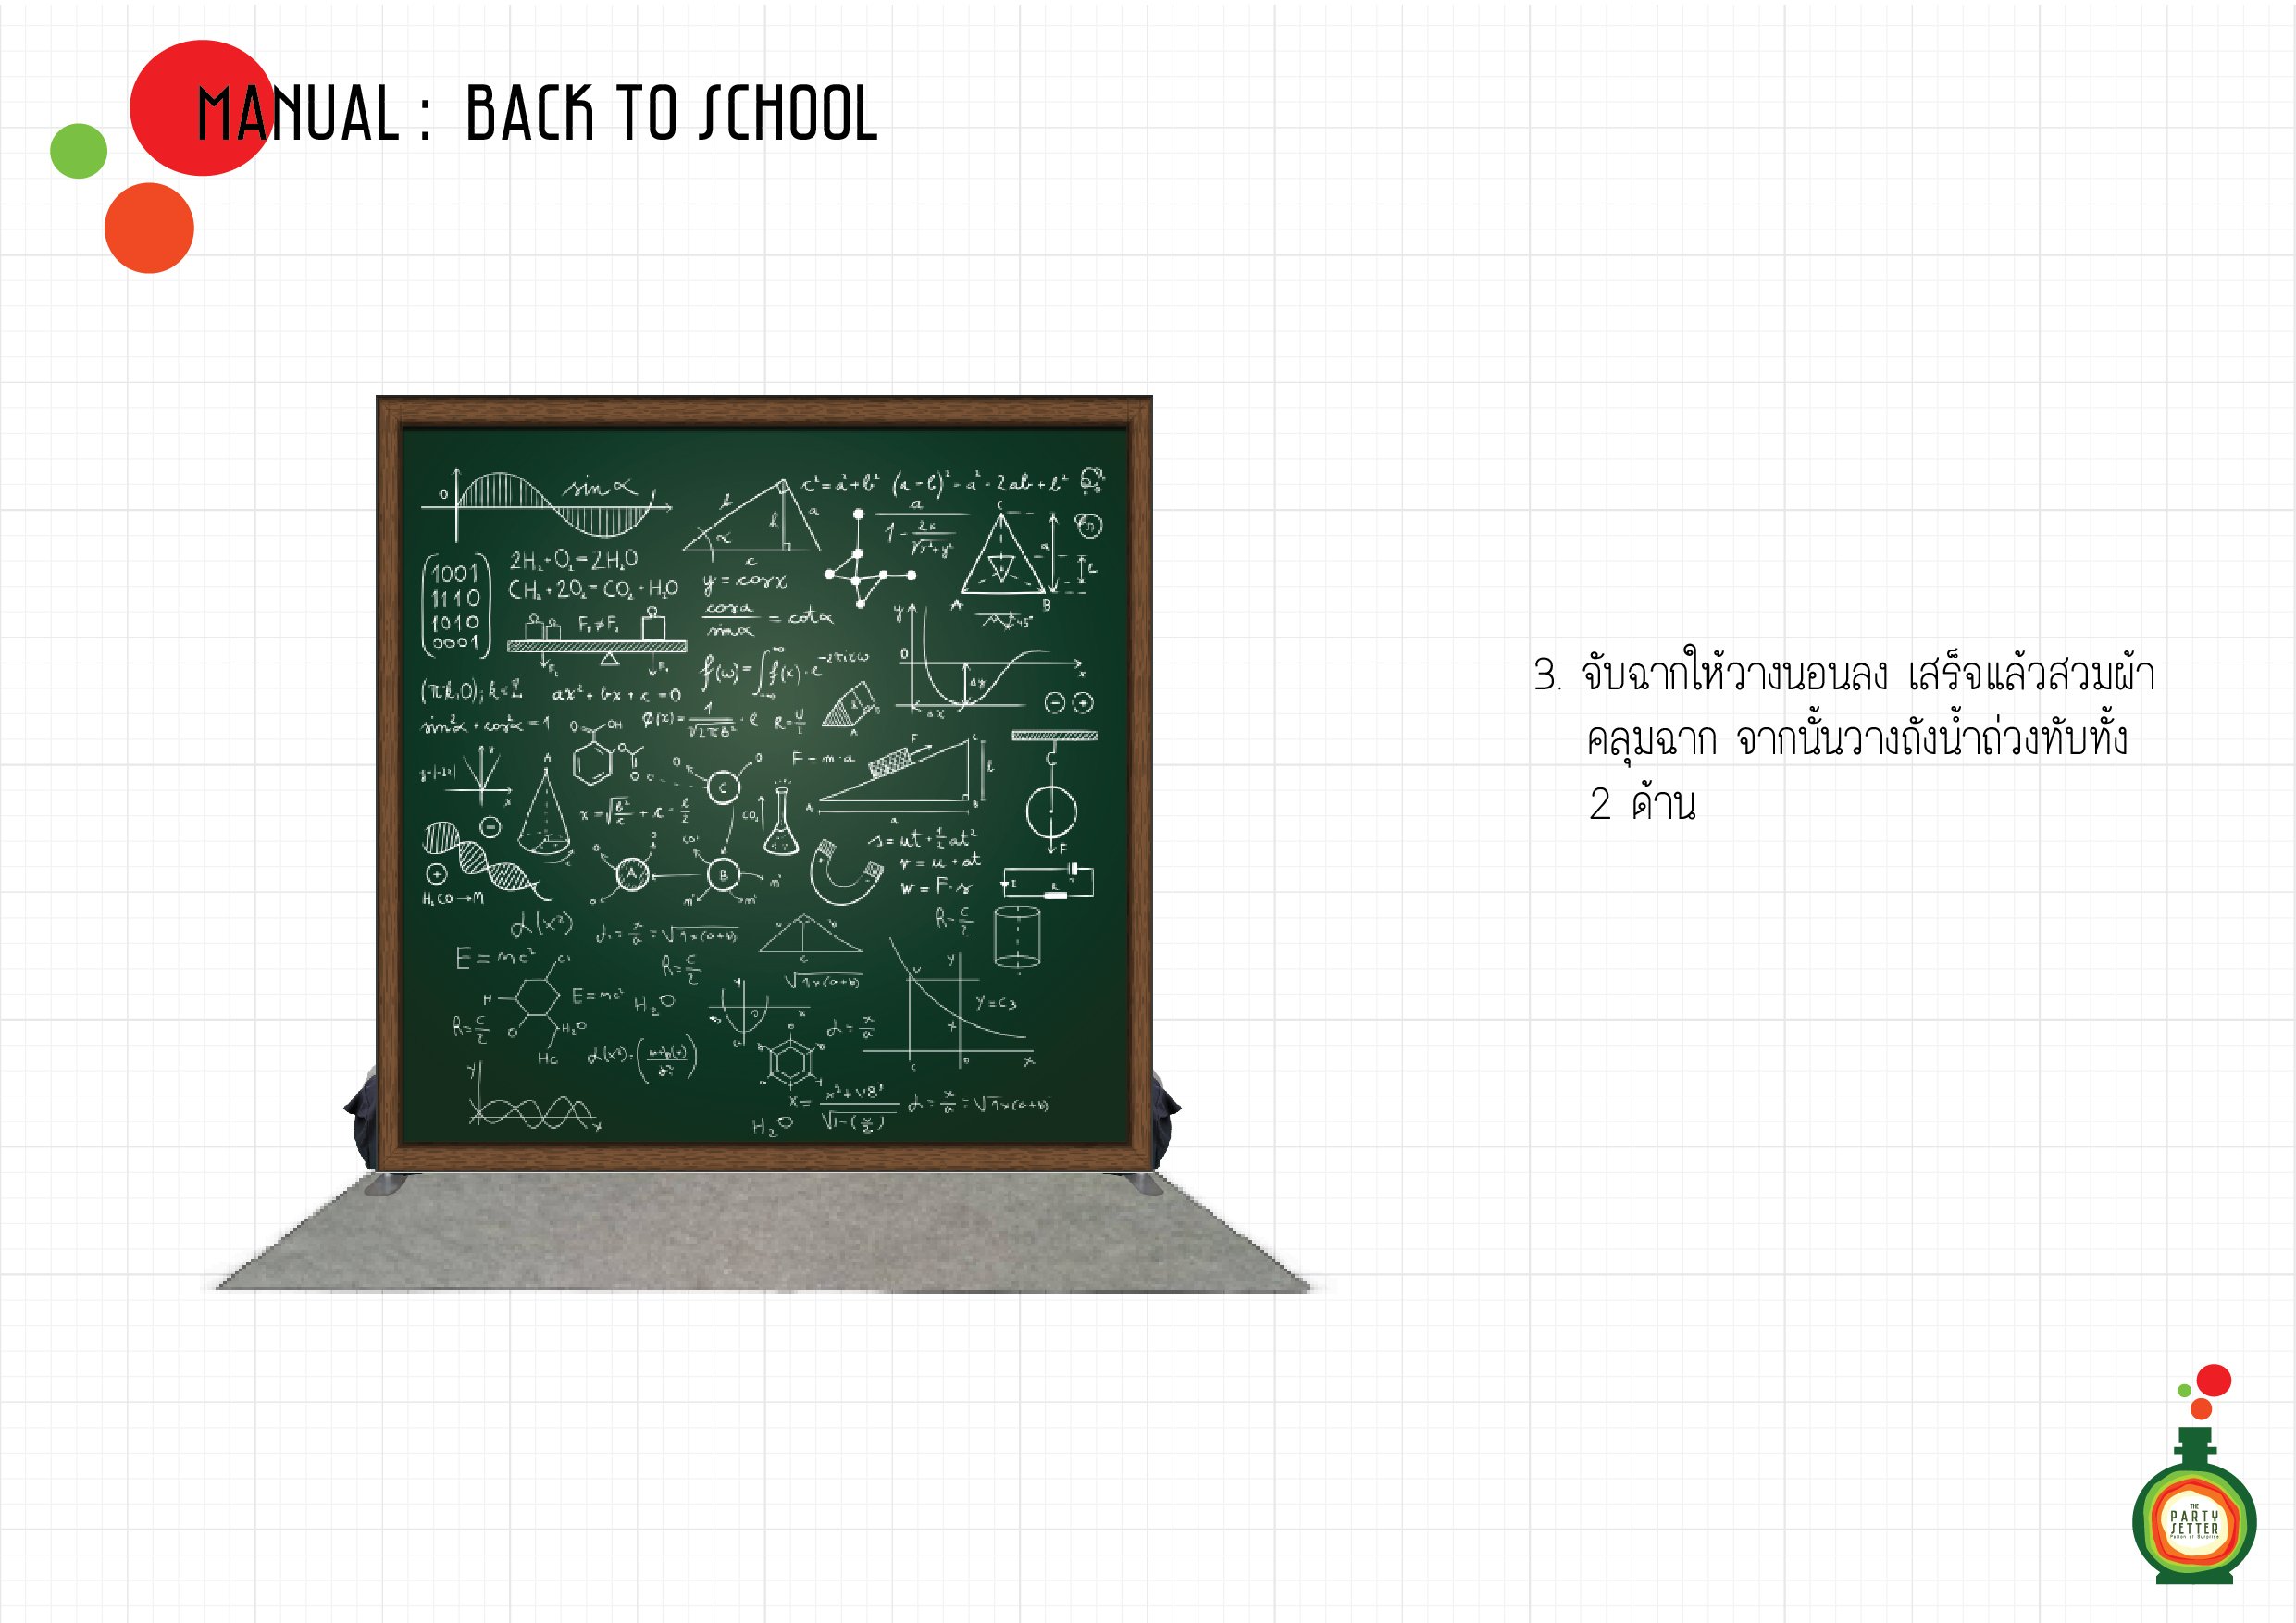 Manual_Back to School-2-03-01.jpg